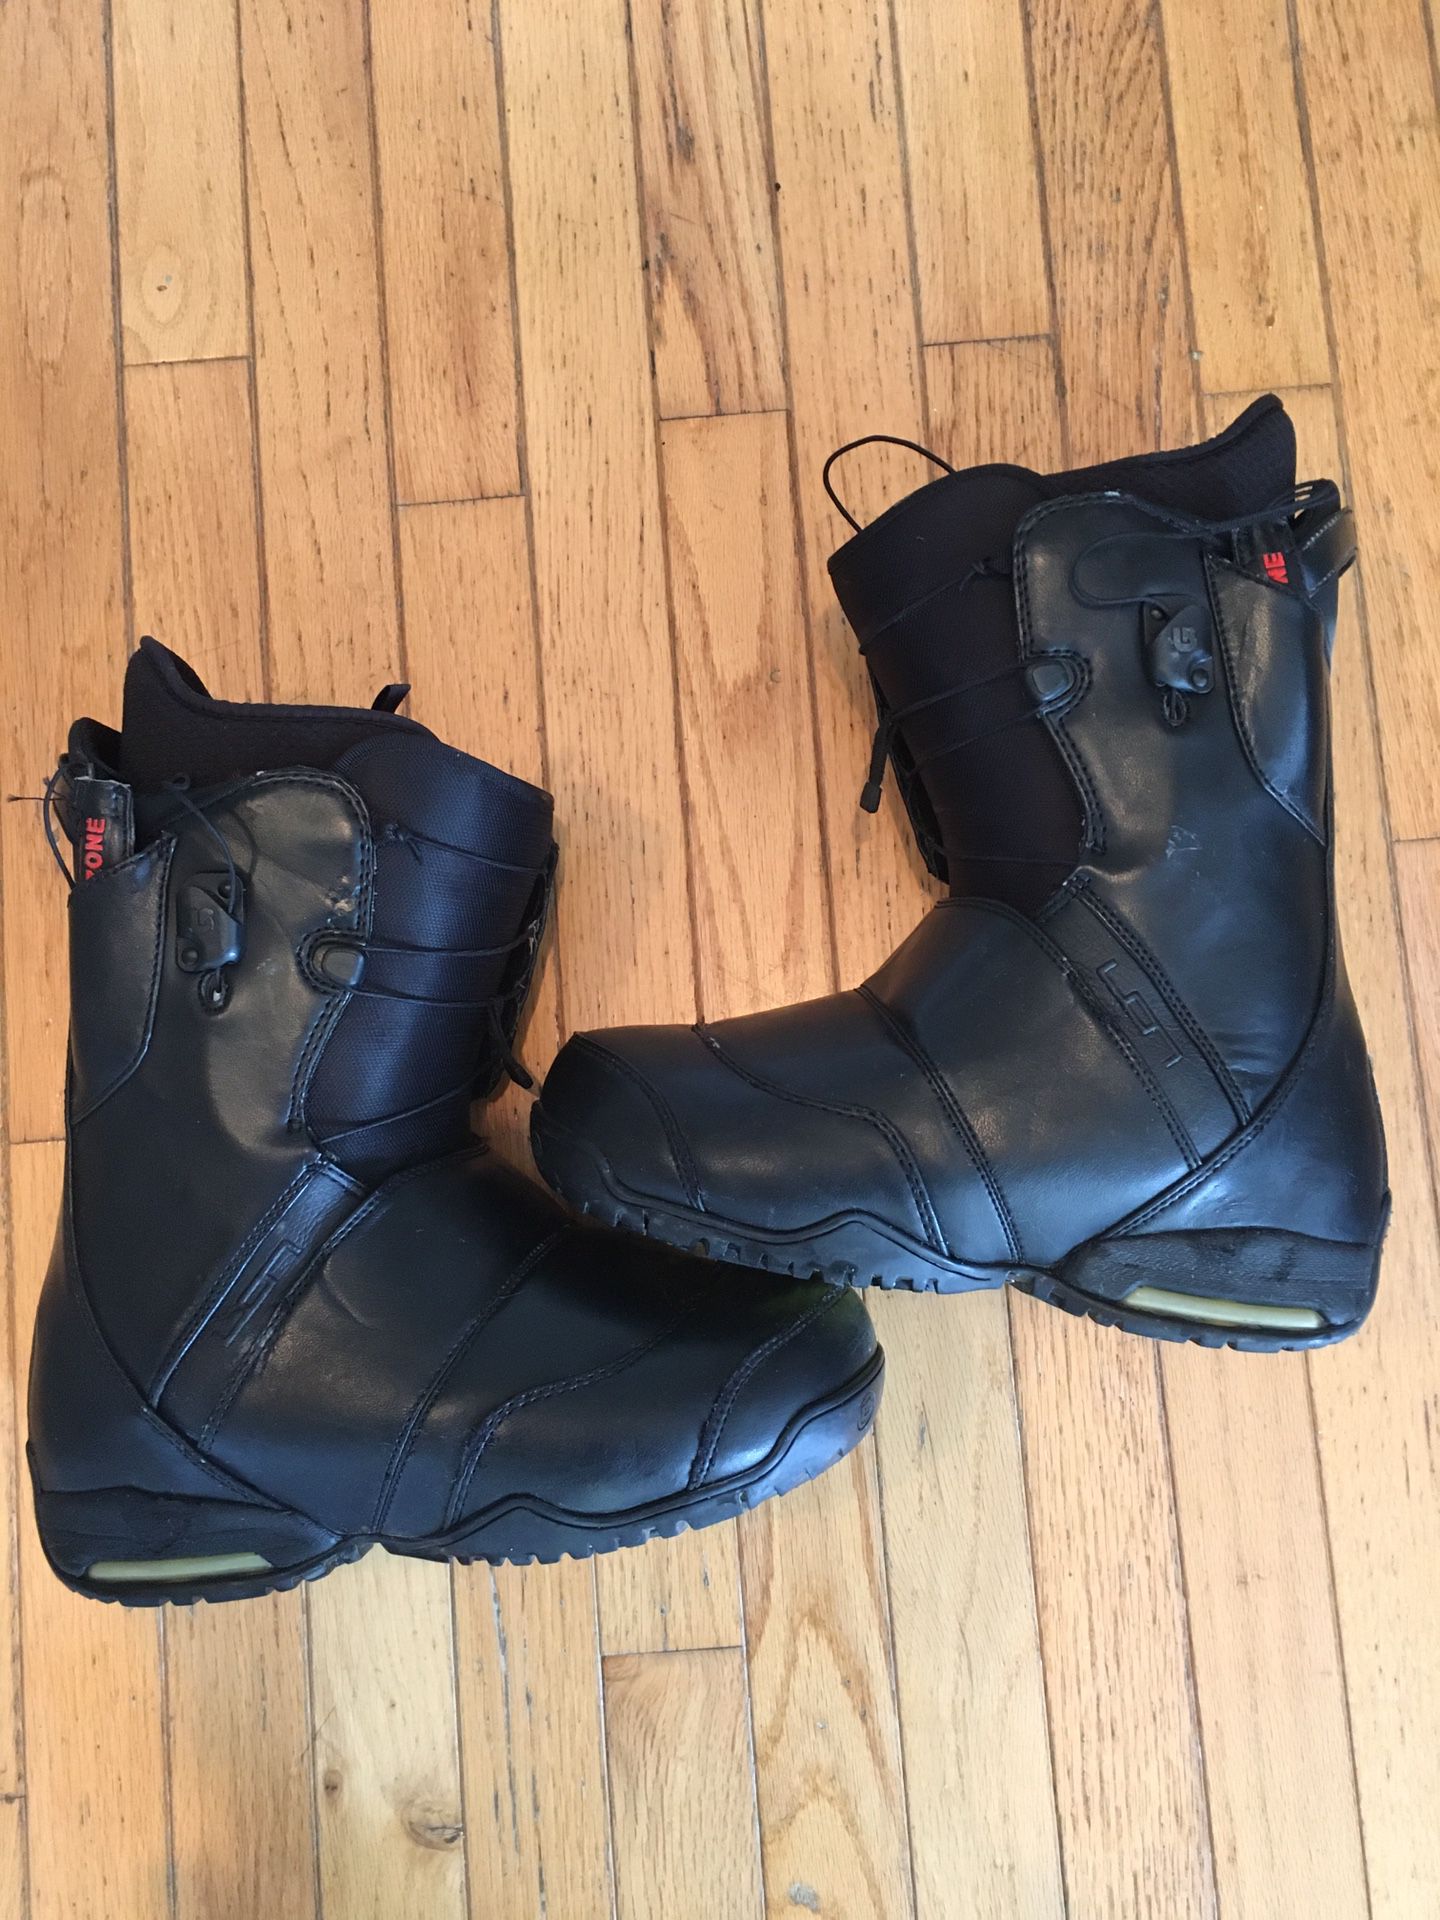 Burton Ion snowboard boots